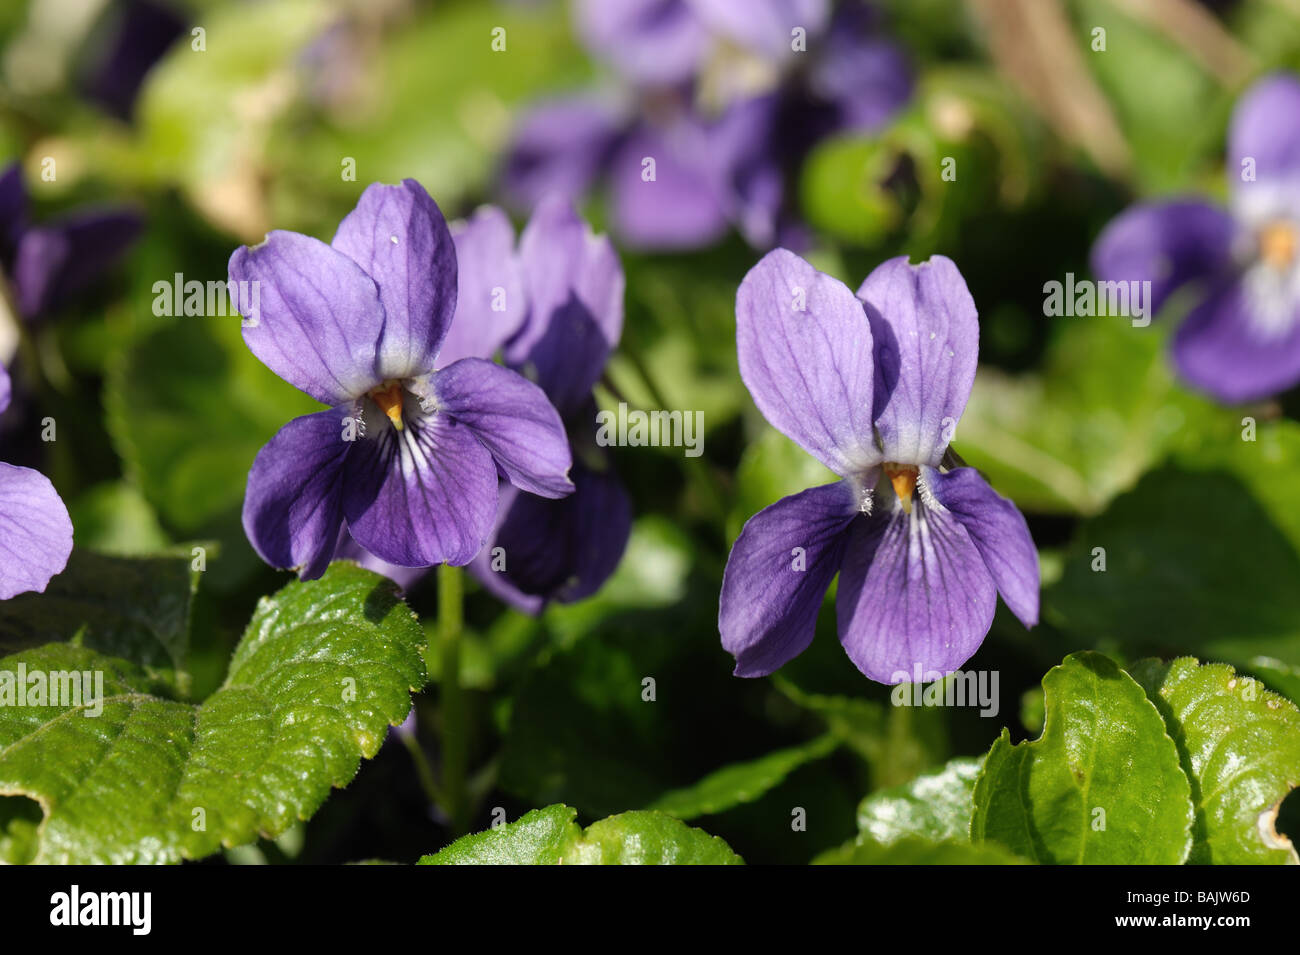 Common dog violet Viola riviniana flowering plant Stock Photo